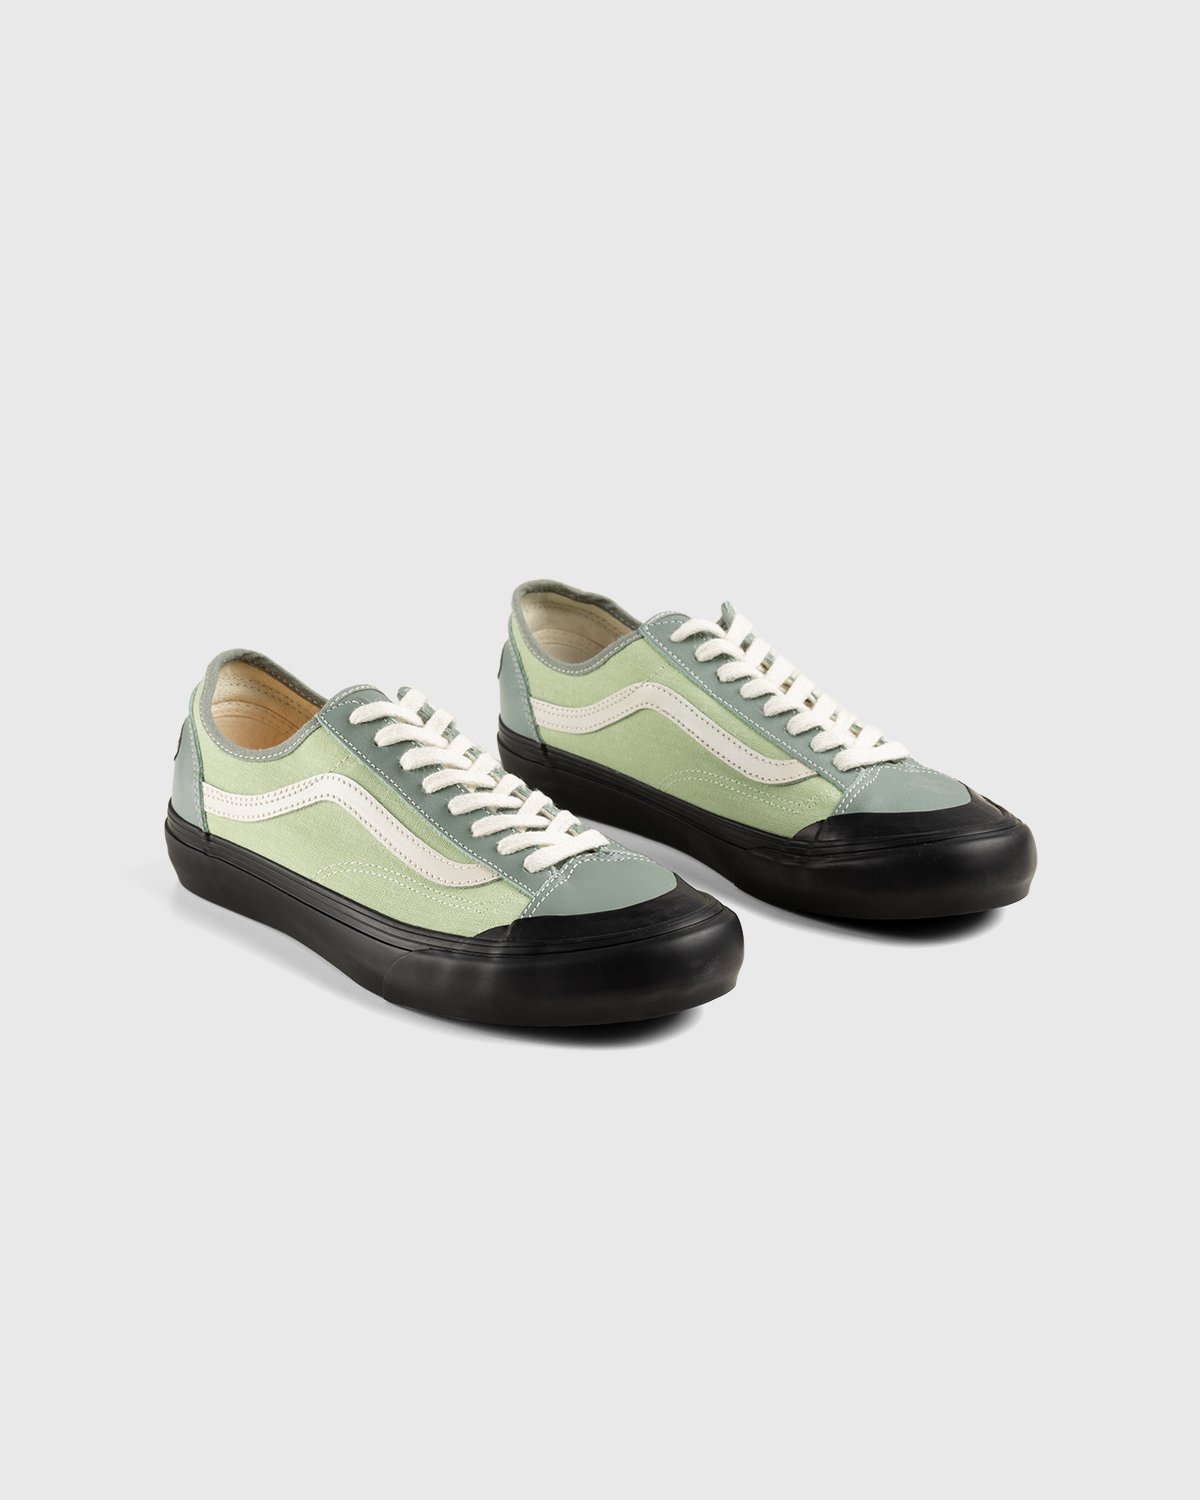 Vans - Style 36 Decon SF Green Milieu/Black - Footwear - Green - Image 5